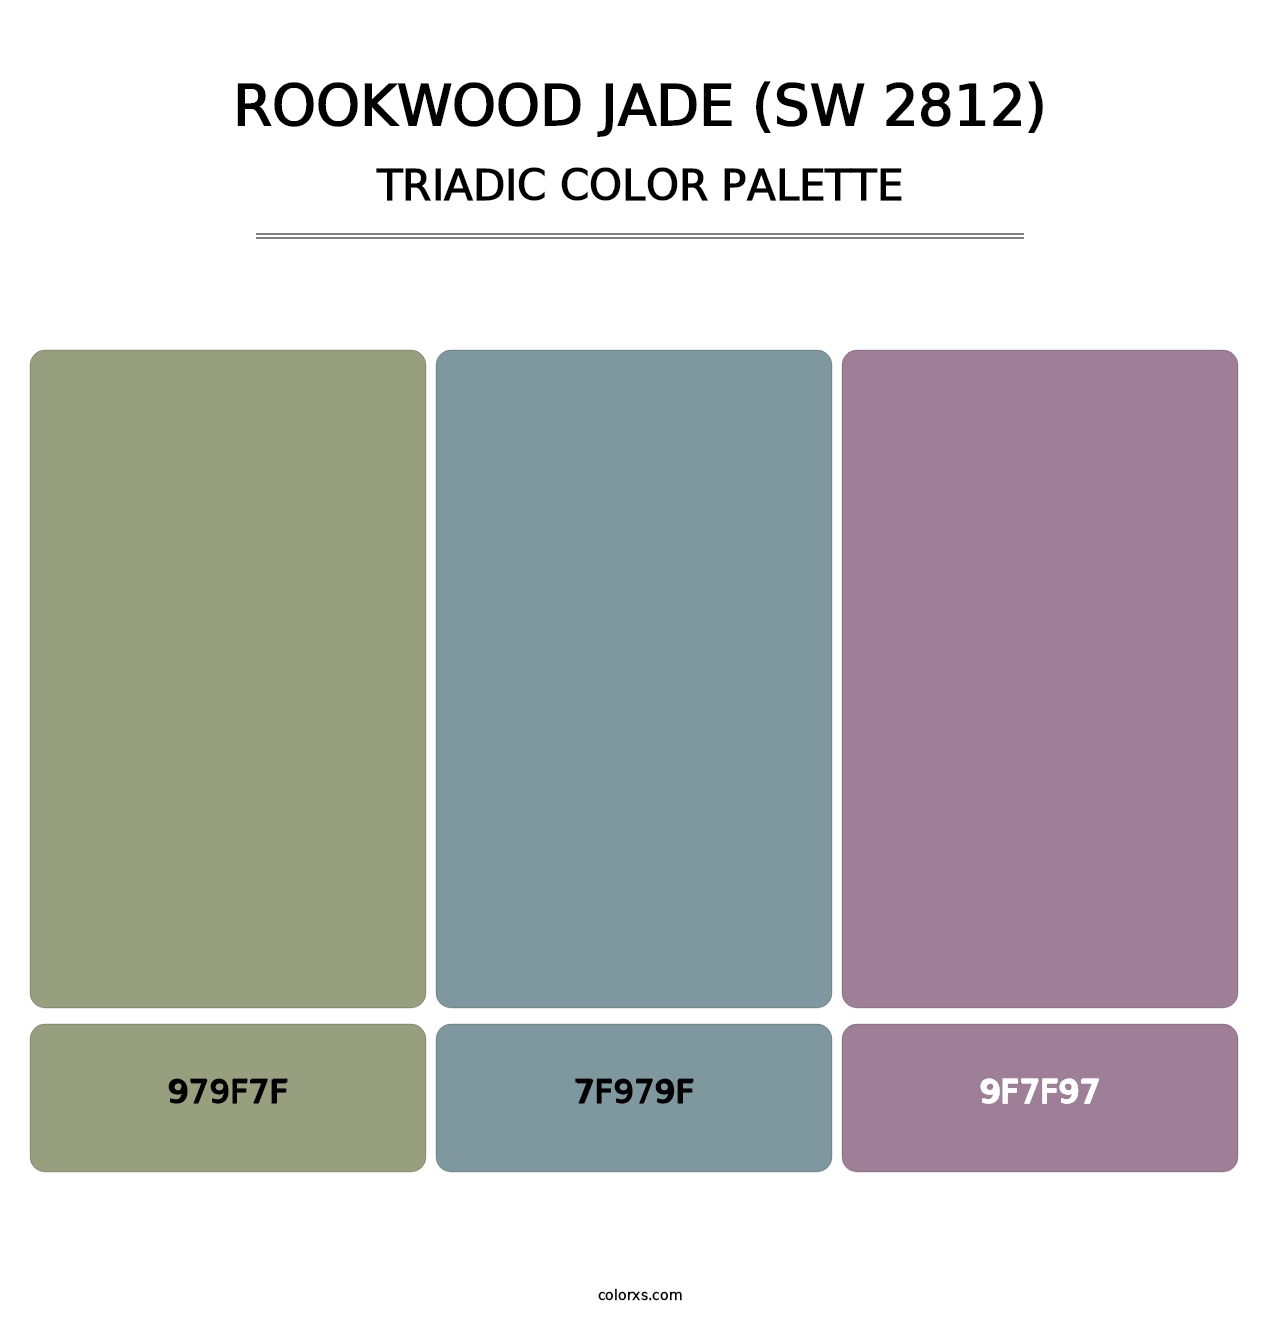 Rookwood Jade (SW 2812) - Triadic Color Palette